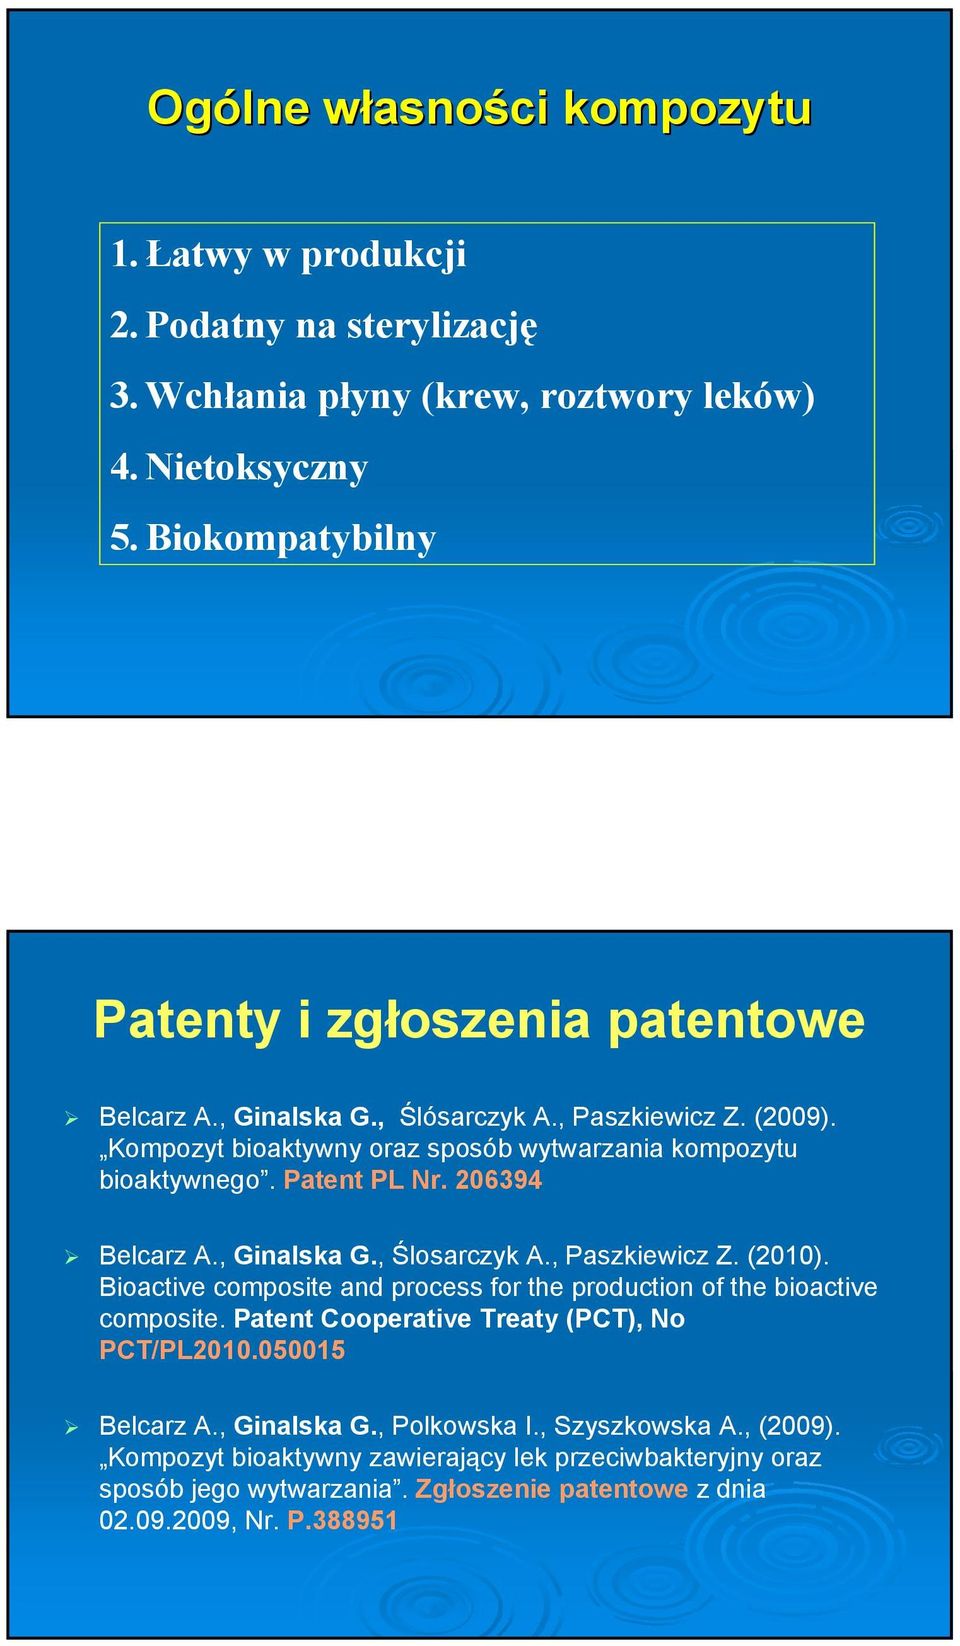 Patent PL Nr. 206394 Belcarz A., Ginalska G., Ślosarczyk A., Paszkiewicz Z. (2010). Bioactive composite and process for the production of the bioactive composite.